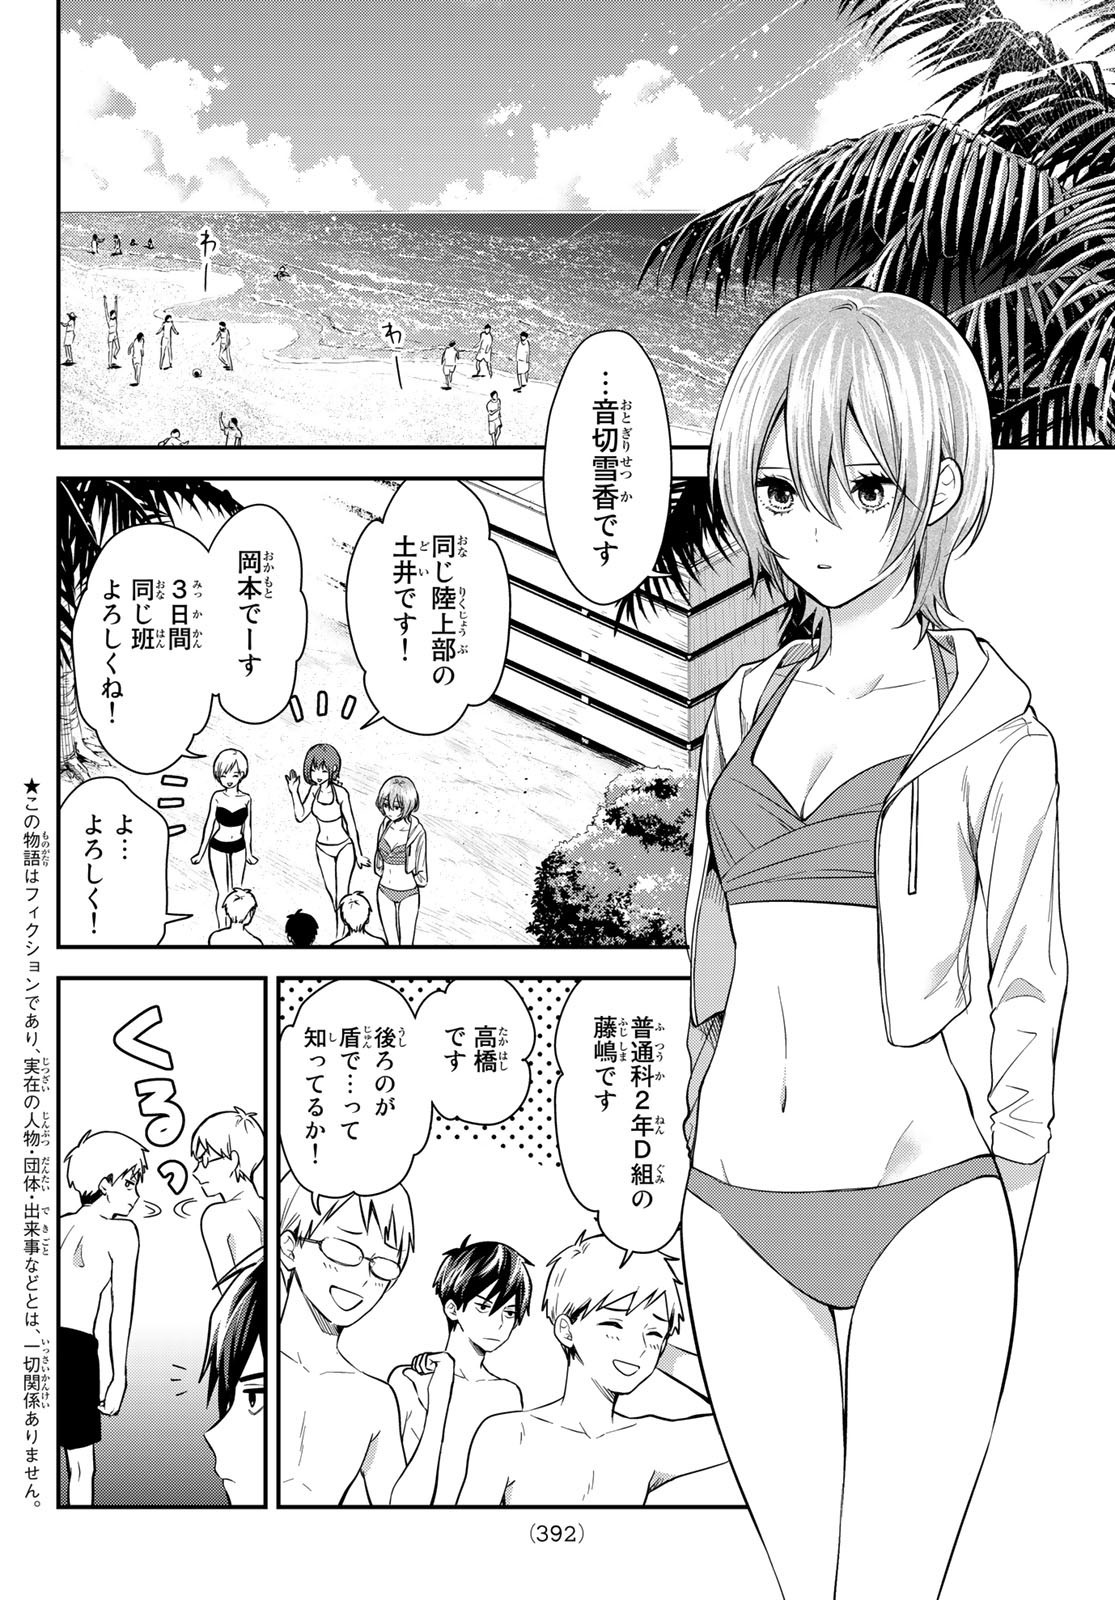 Kimi ga Megami Nara Ii no ni (I Wish You Were My Muse) - Chapter 020 - Page 2